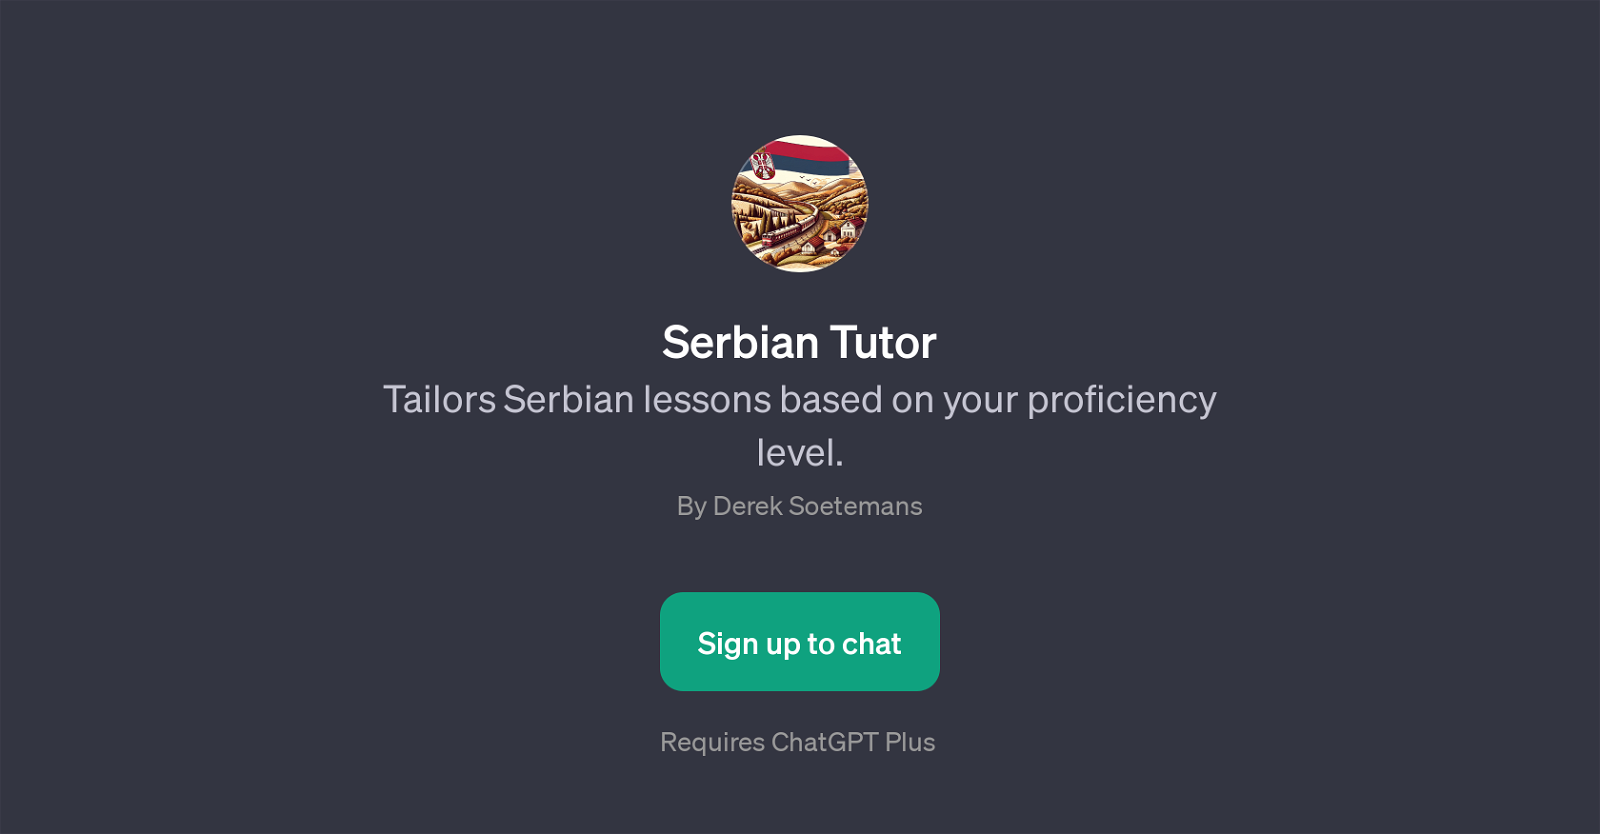 Serbian Tutor website